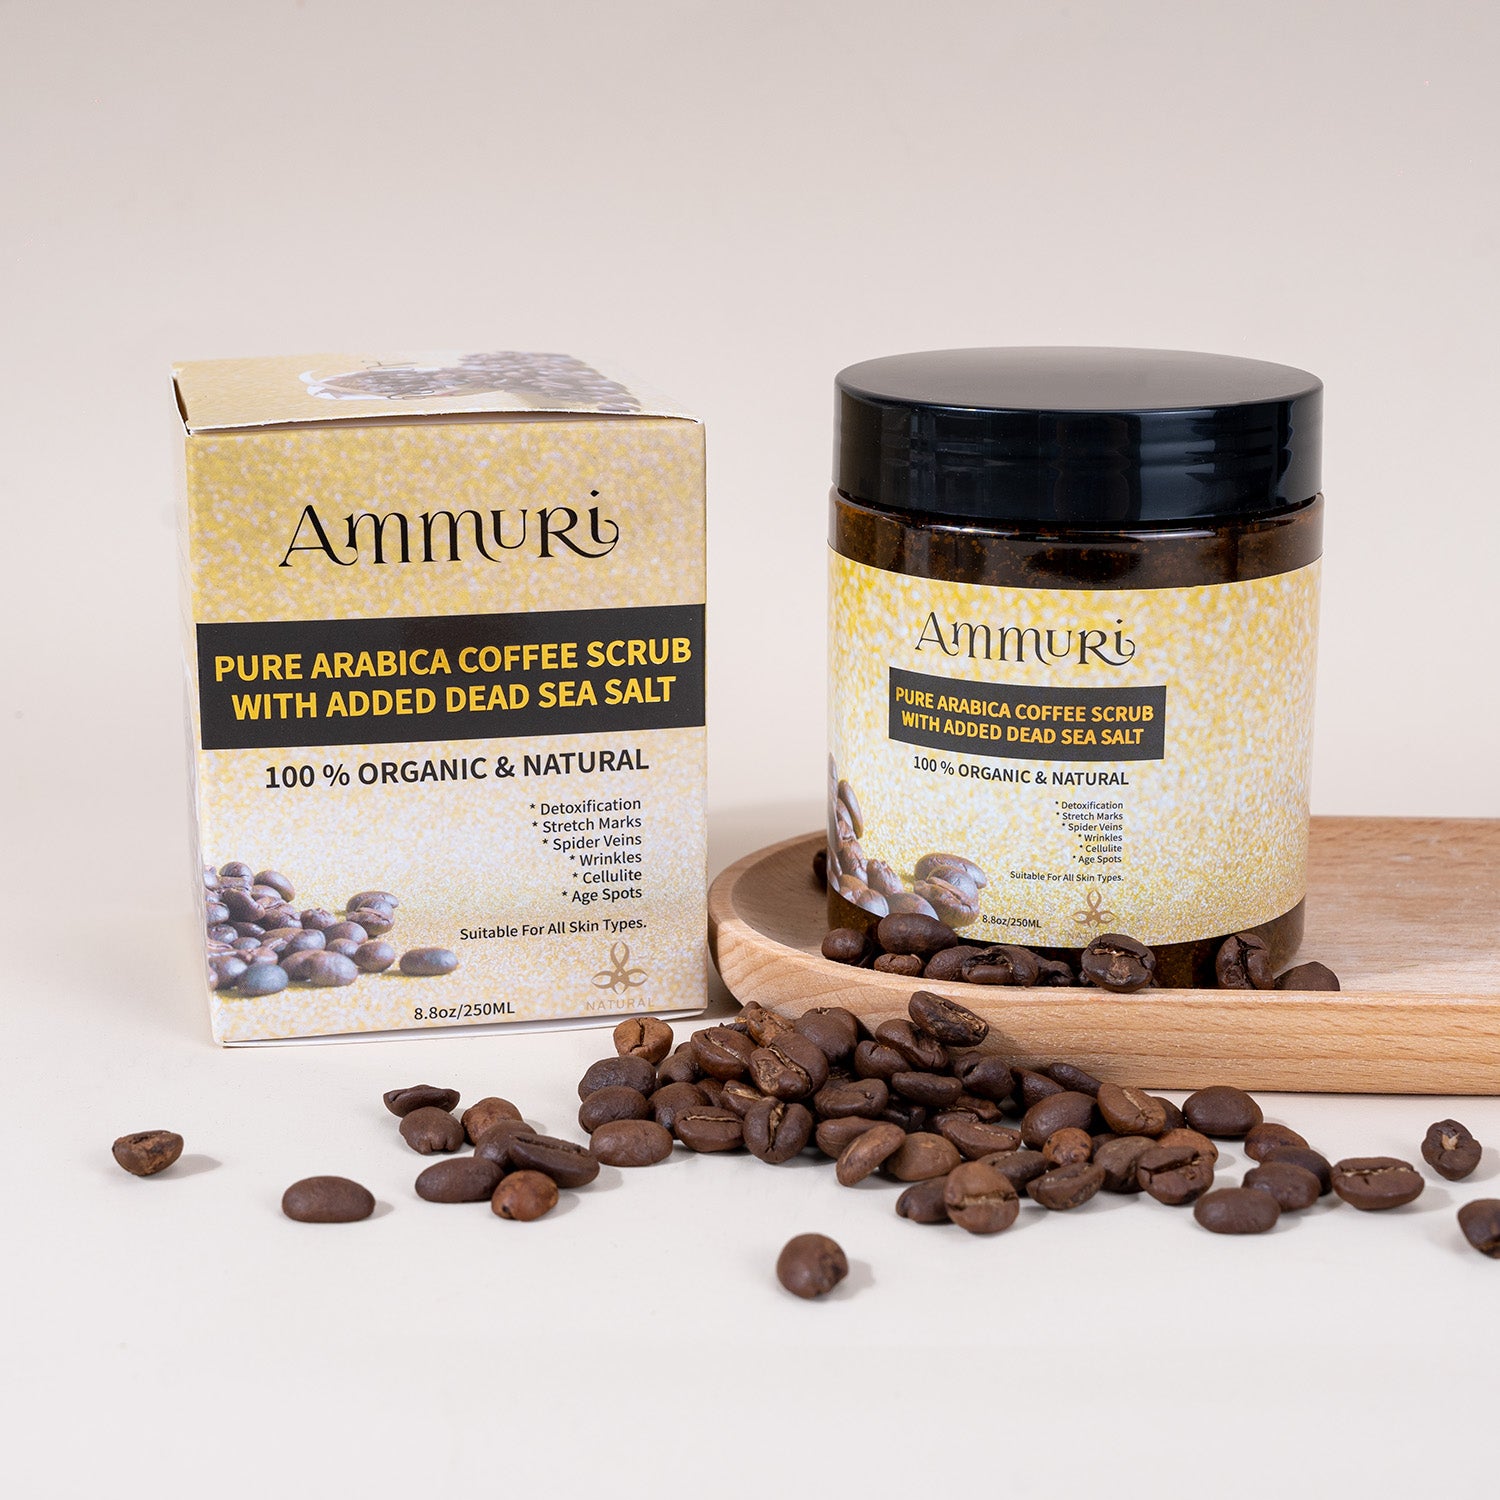 Pure Arabica Coffee Scrub - Organic Cellulite, Acne Treatment, Anti-Aging, 100% Natural Ammuri Skincare